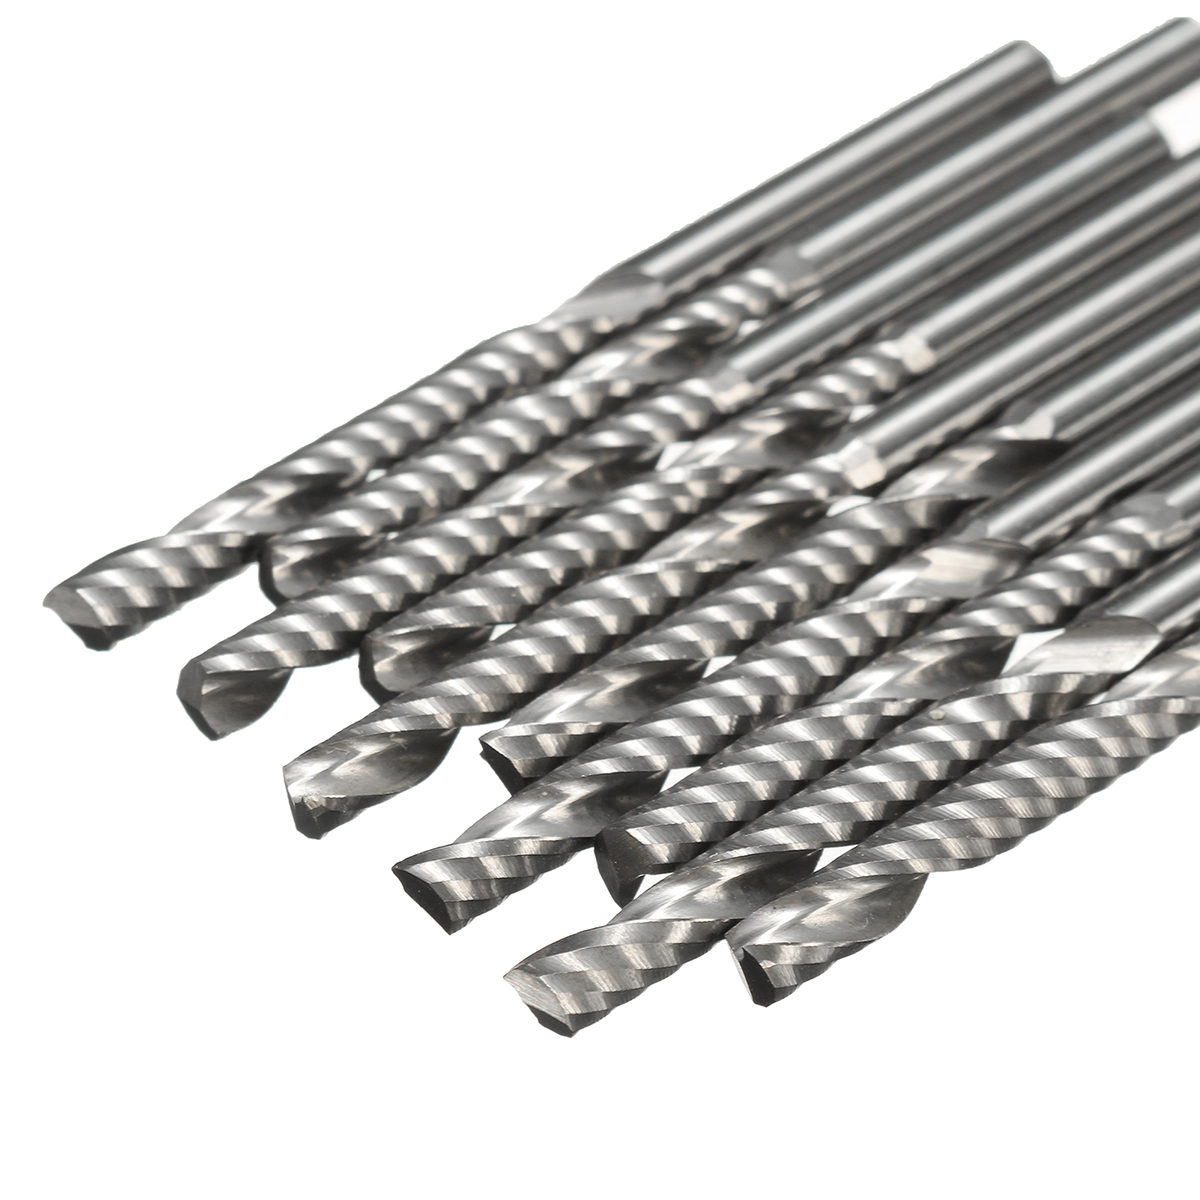 Drillpro-DB-M7-10pcs-18-Inch-Shank-End-Mill-Cutter-1-Flute-Carbide-Spiral-Milling-Cutter-1033261-3